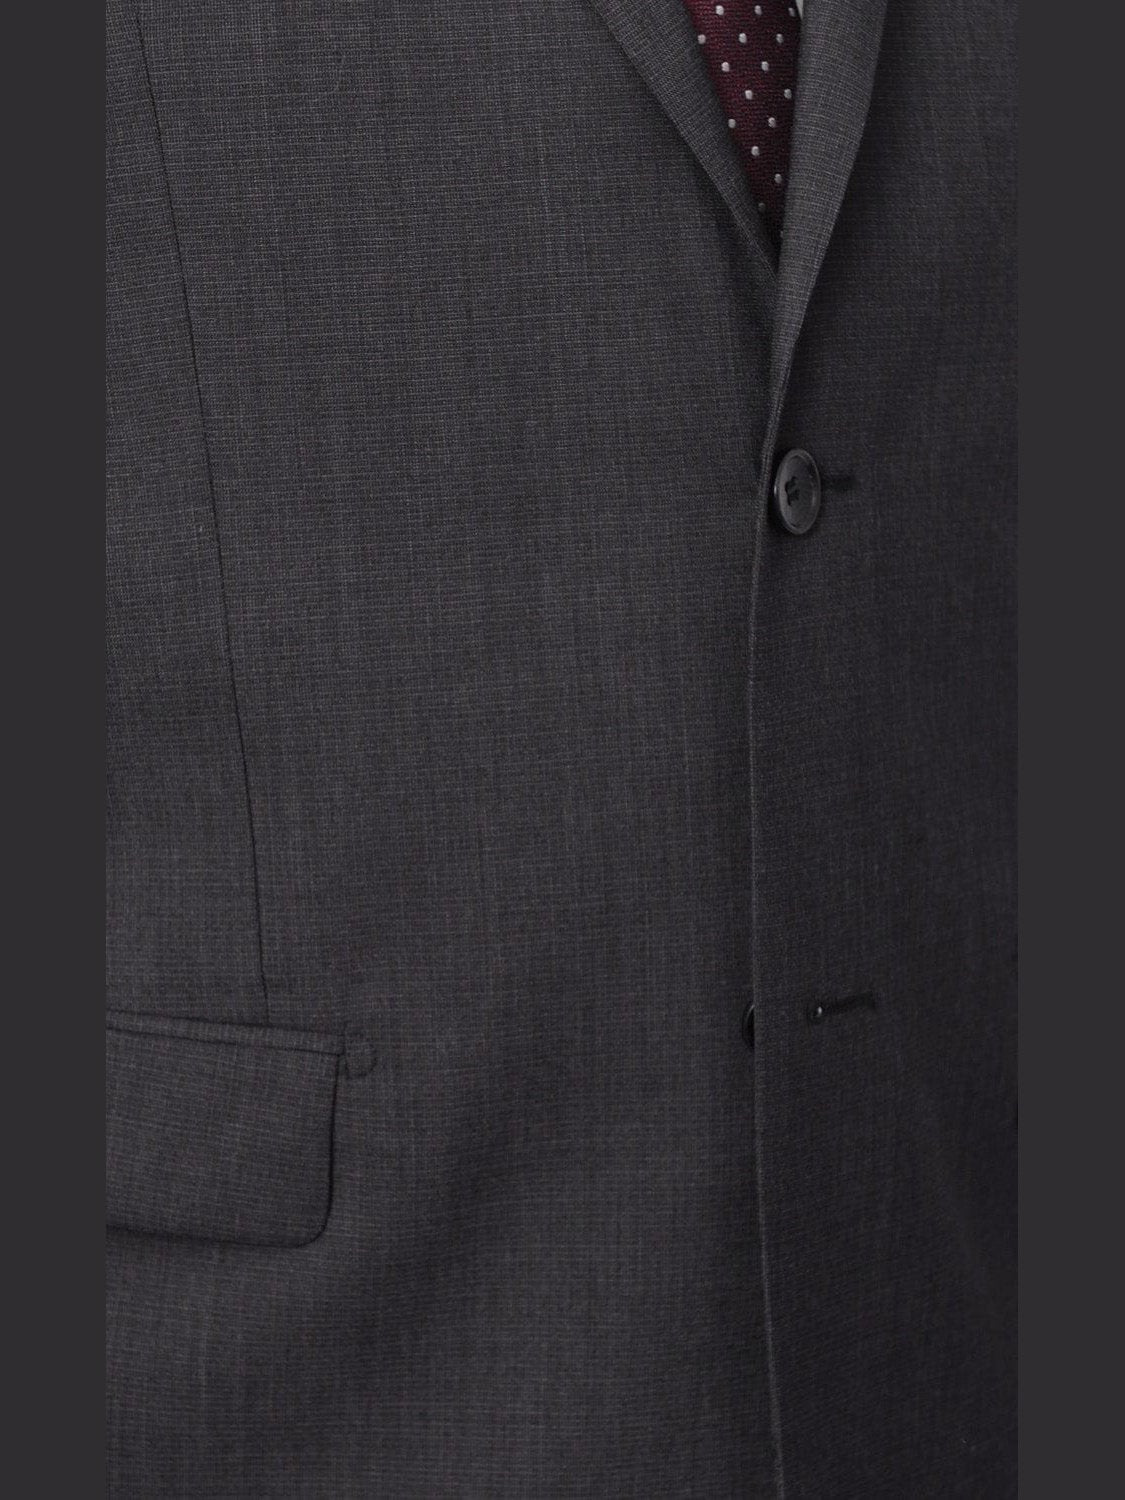 Prontomoda TWO PIECE SUITS Prontomoda Mens Solid Charcoal Gray 100% Merino Wool Regular Fit Suit